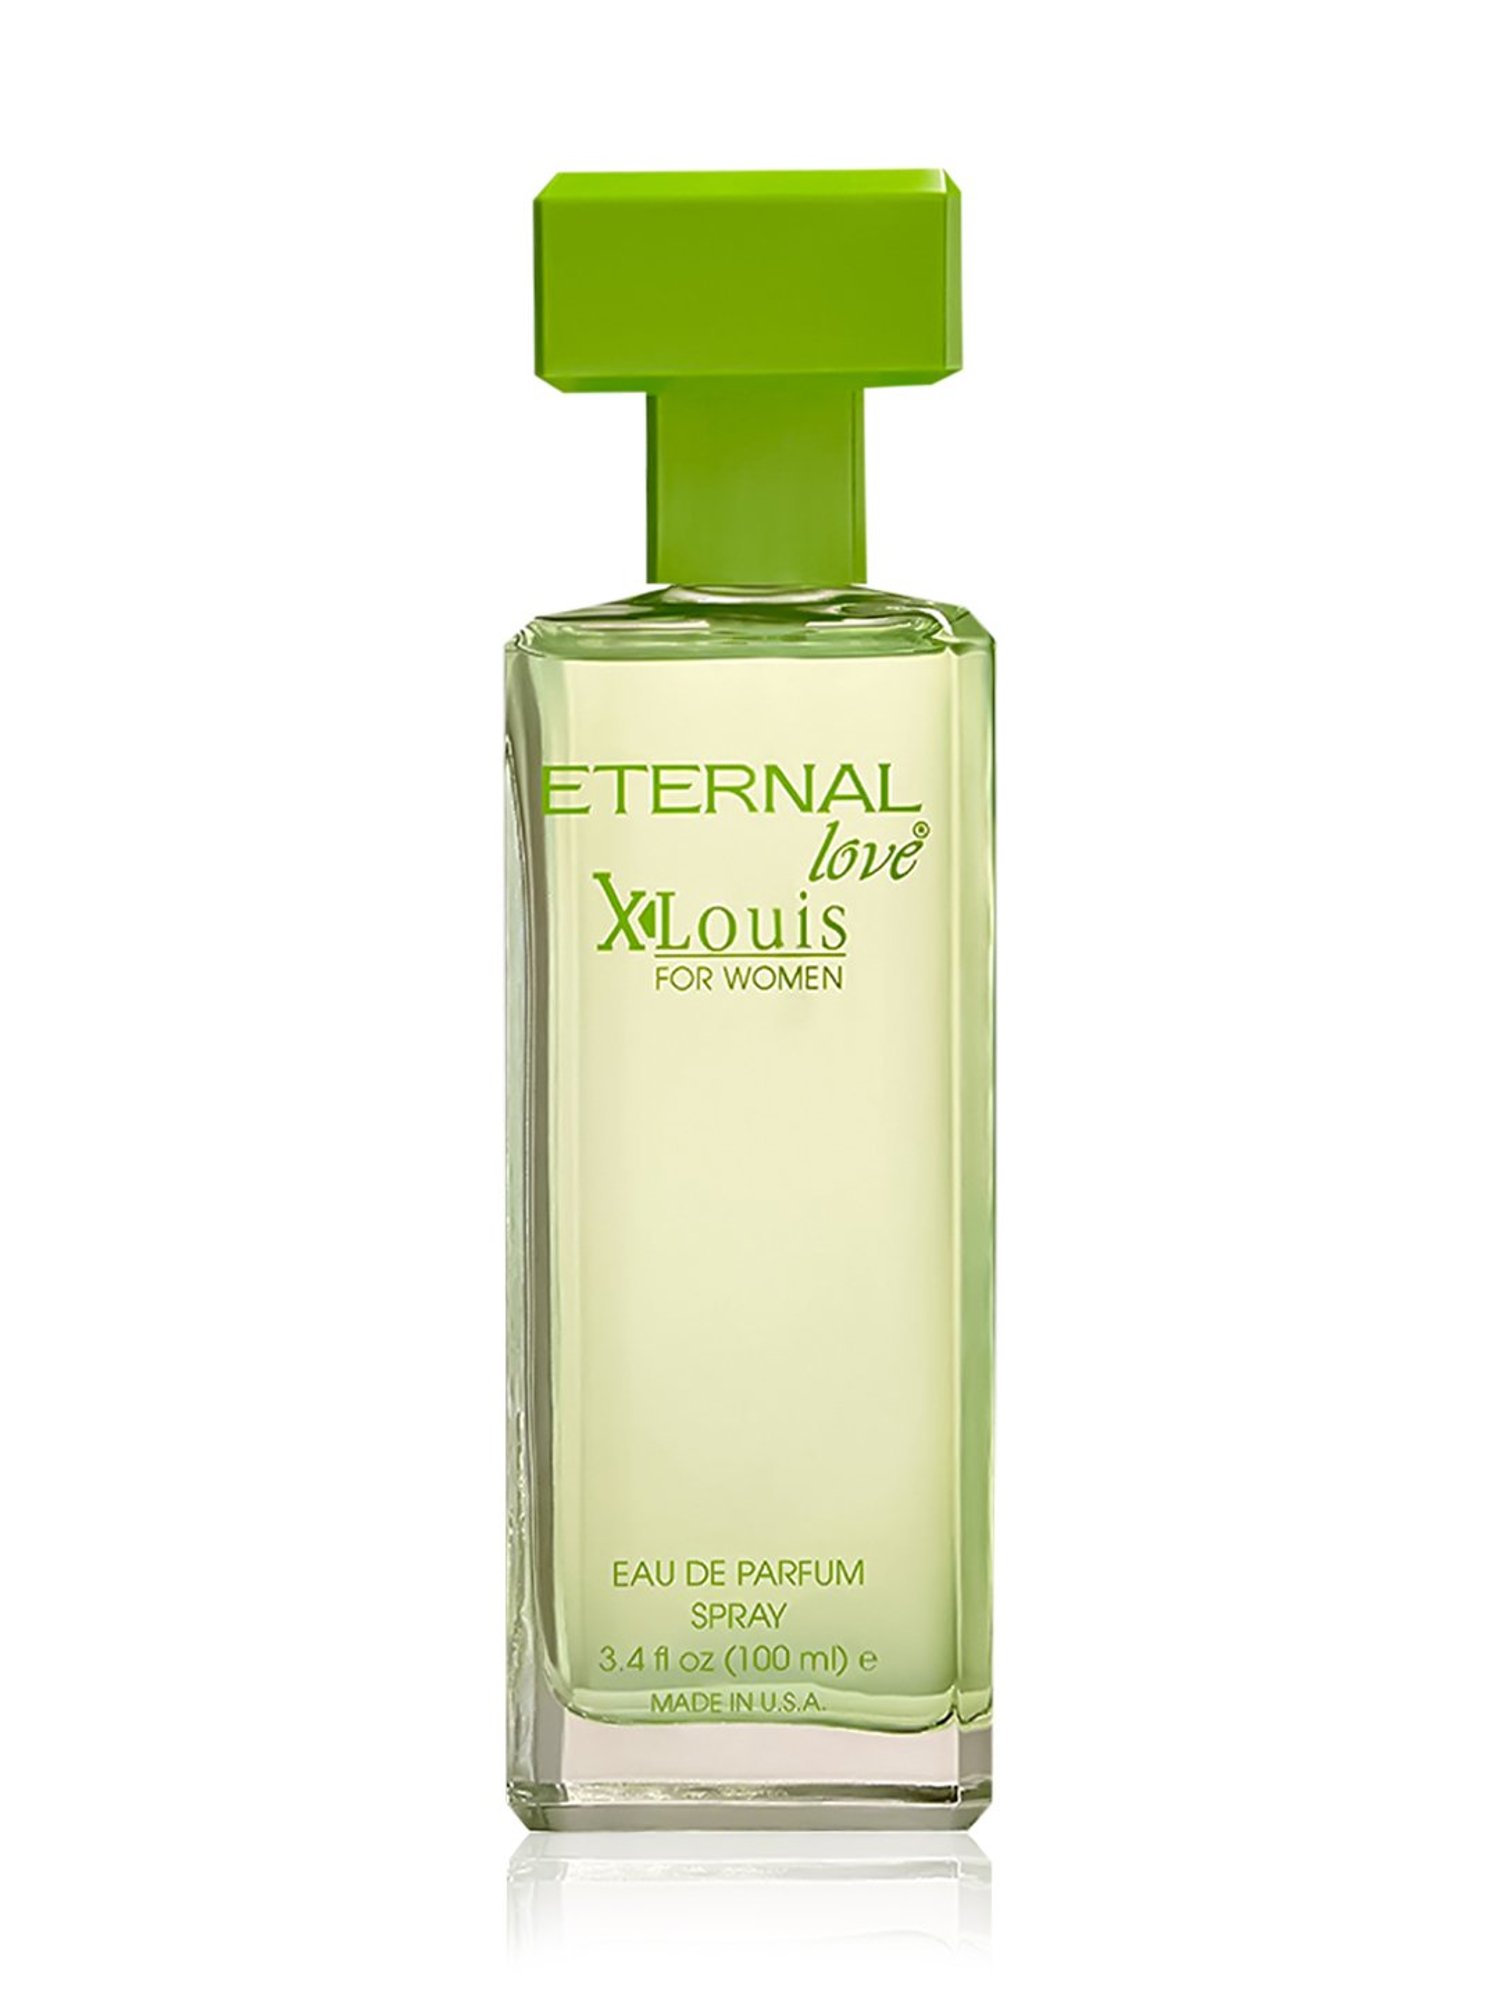 eternal love x louis for men 100 ml eau de parfum spray